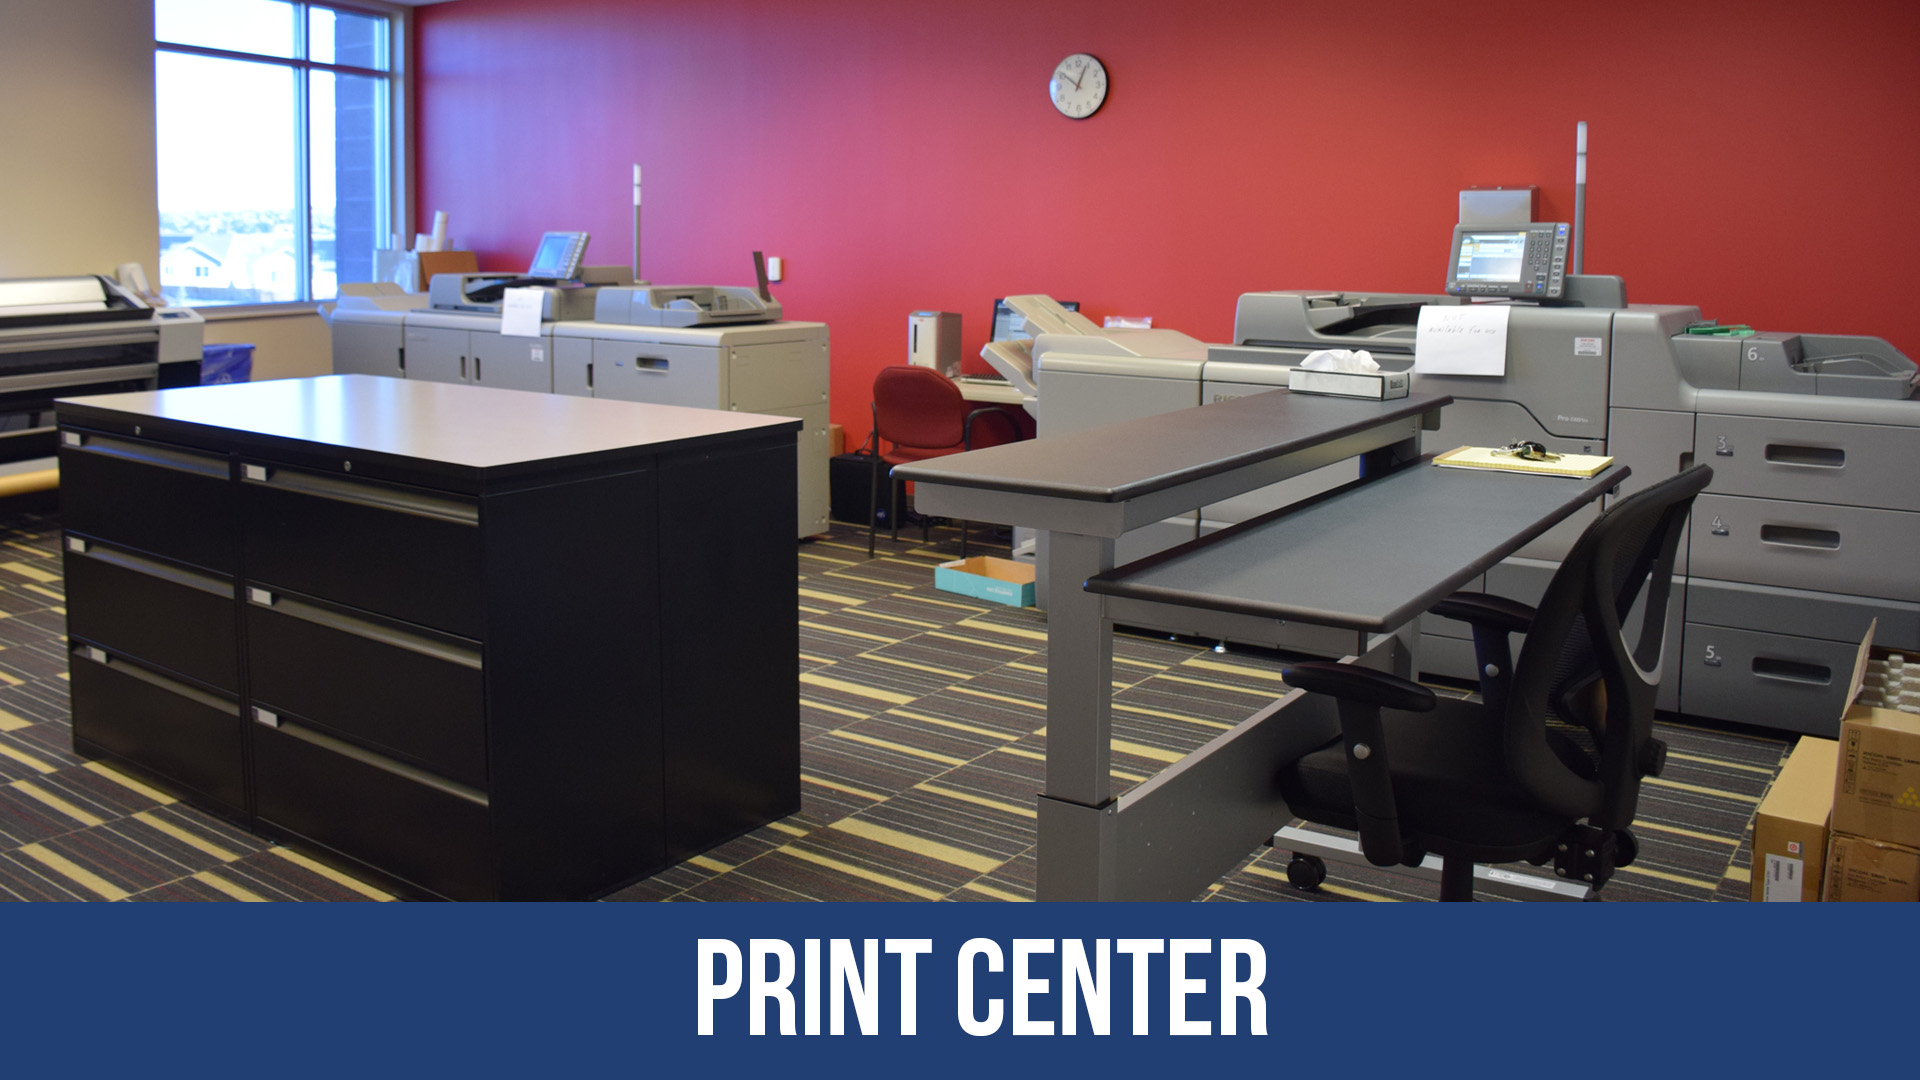 Print Center at RVU